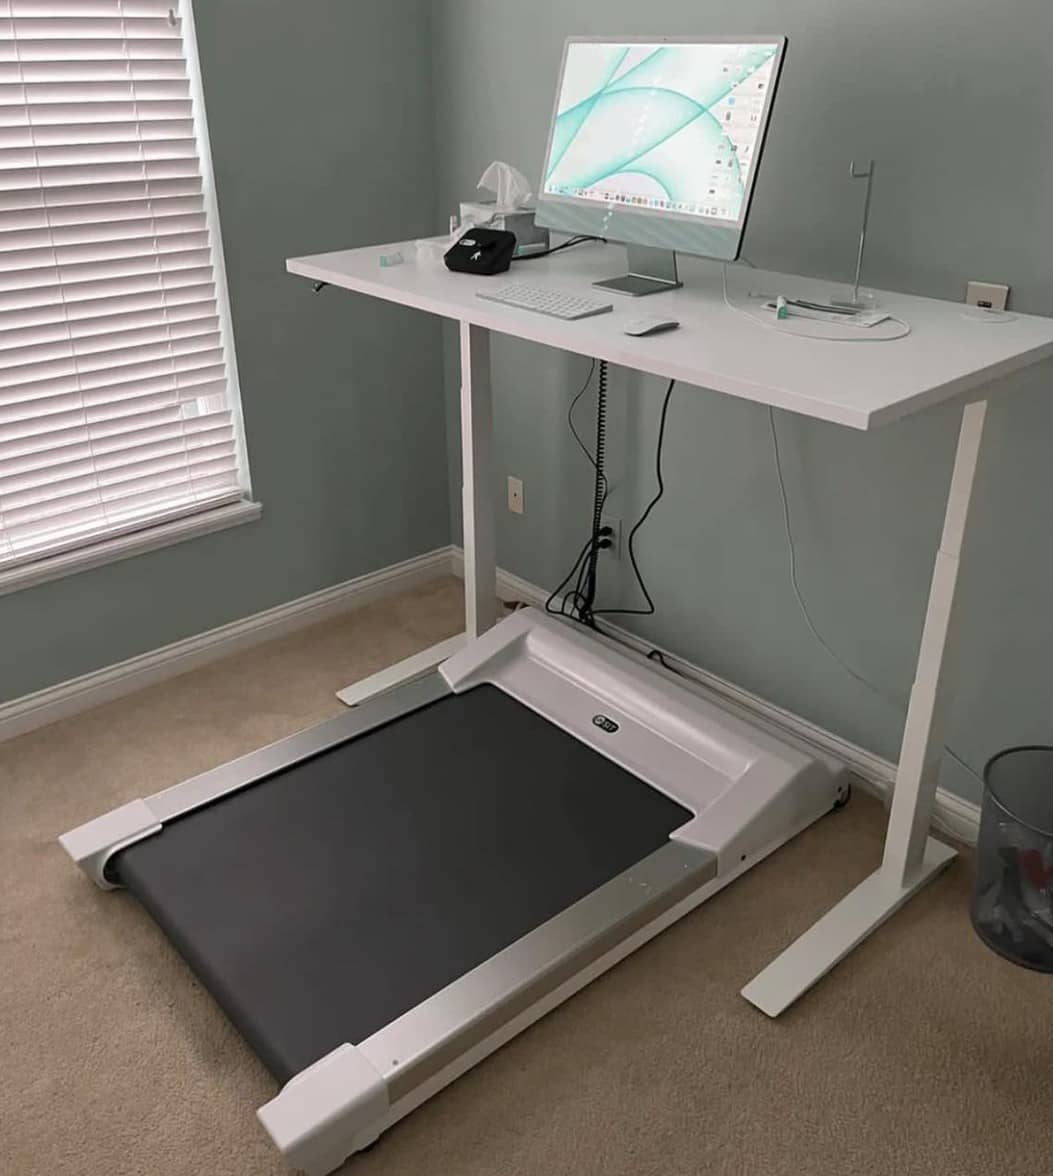 unsit treadmill desk review by Standingdesktopper